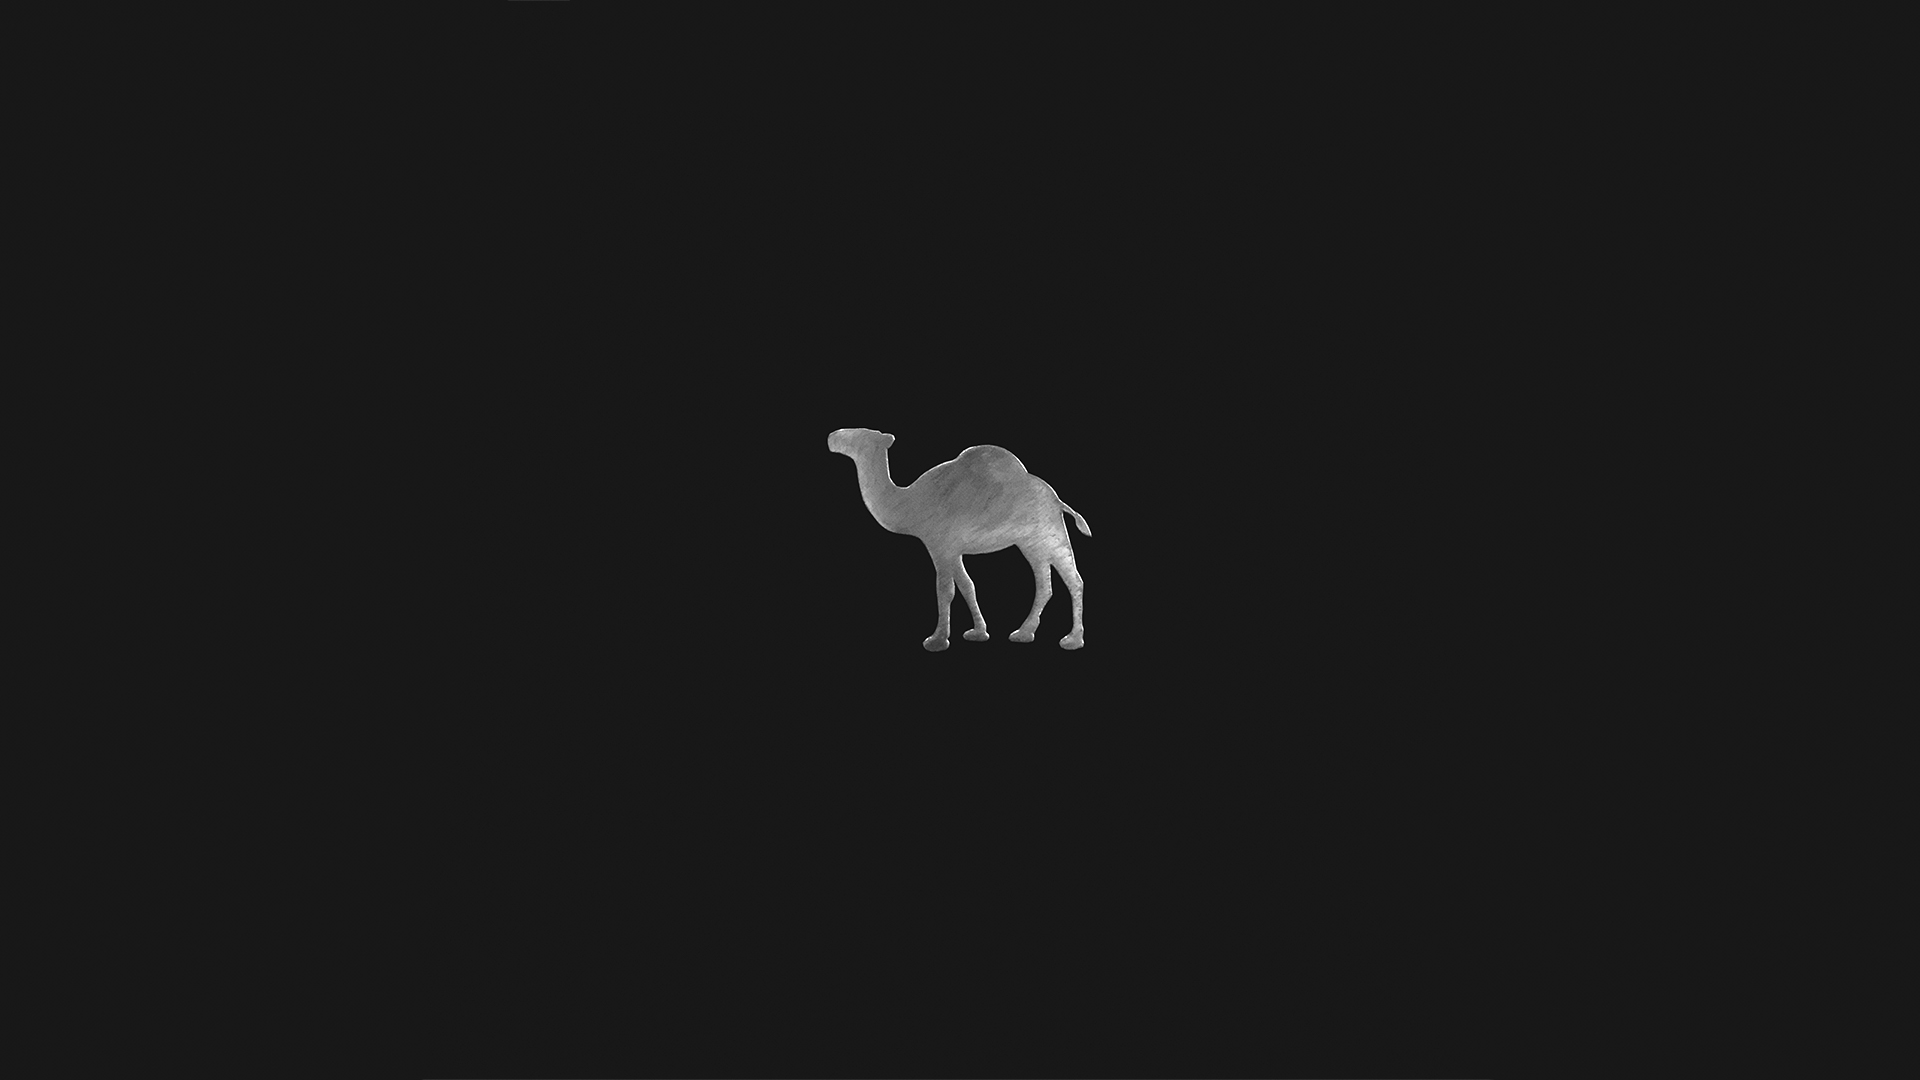 General 1920x1080 animals minimalism silver black background camels